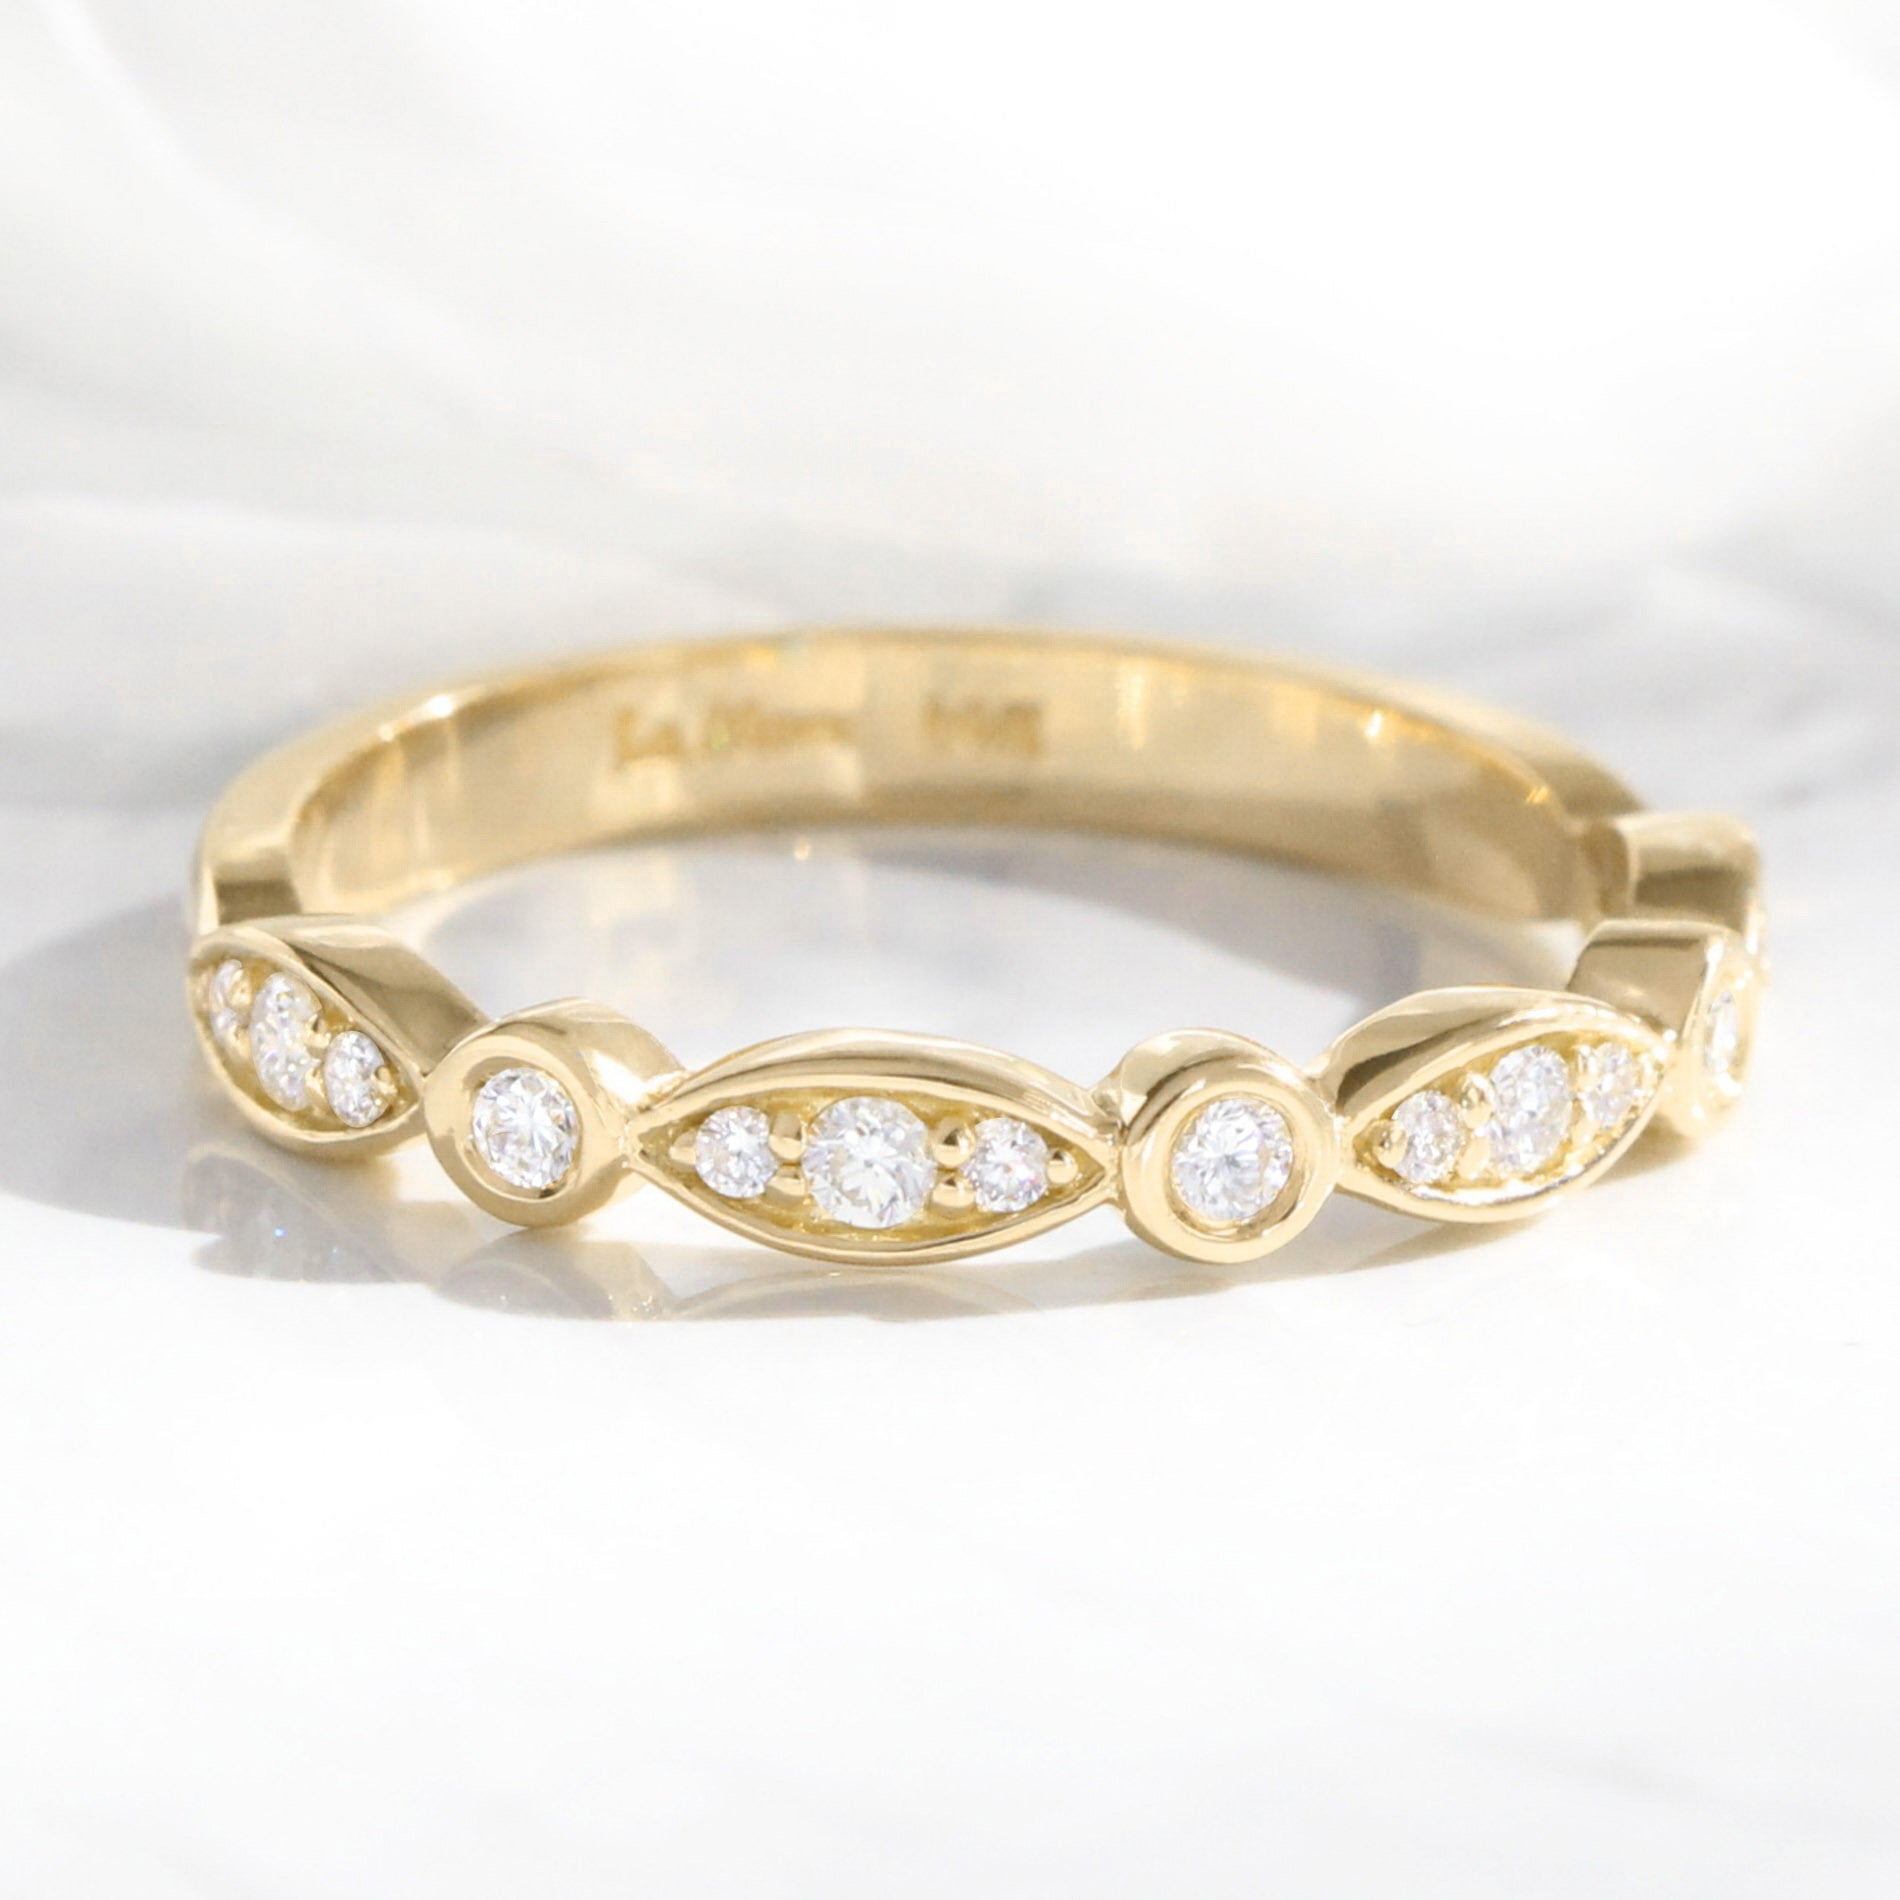 Bezel diamond wedding ring yellow gold scalloped half eternity band la more design jewelry